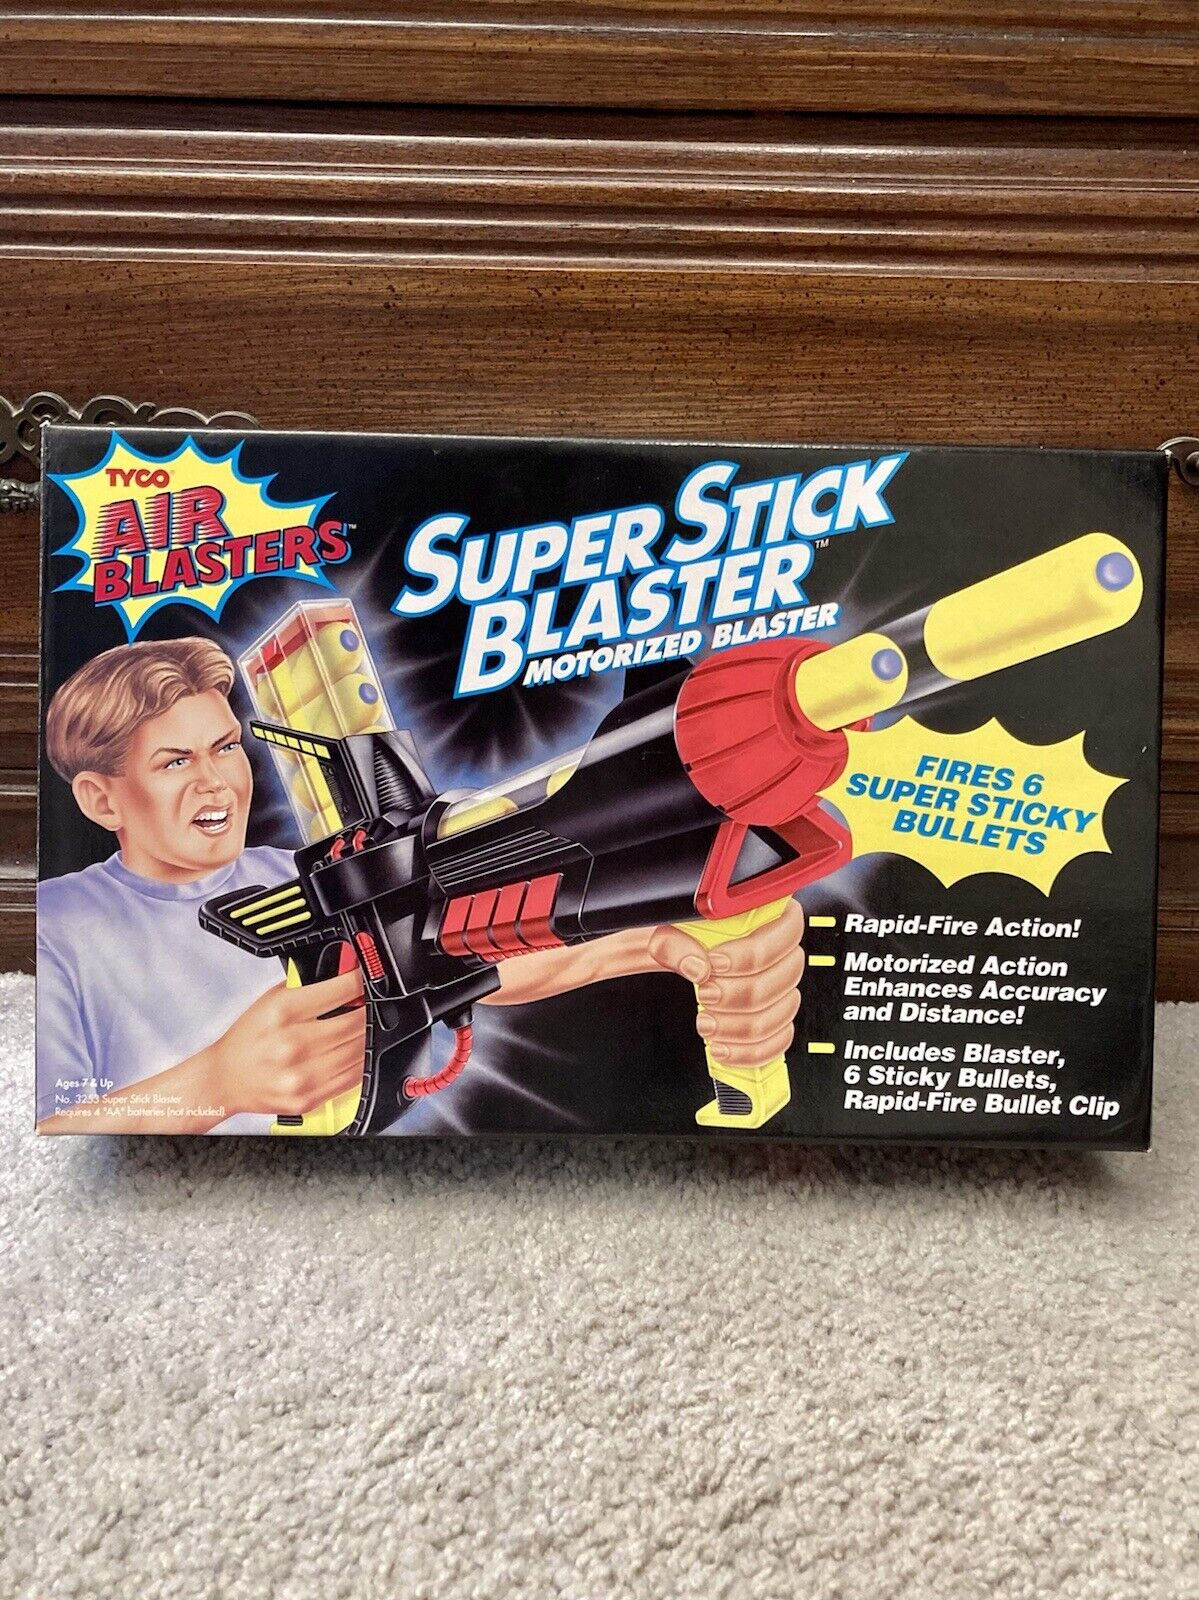 Vintage 1993 Tyco Air Blaster Super Stick Blaster Motorized Blaster